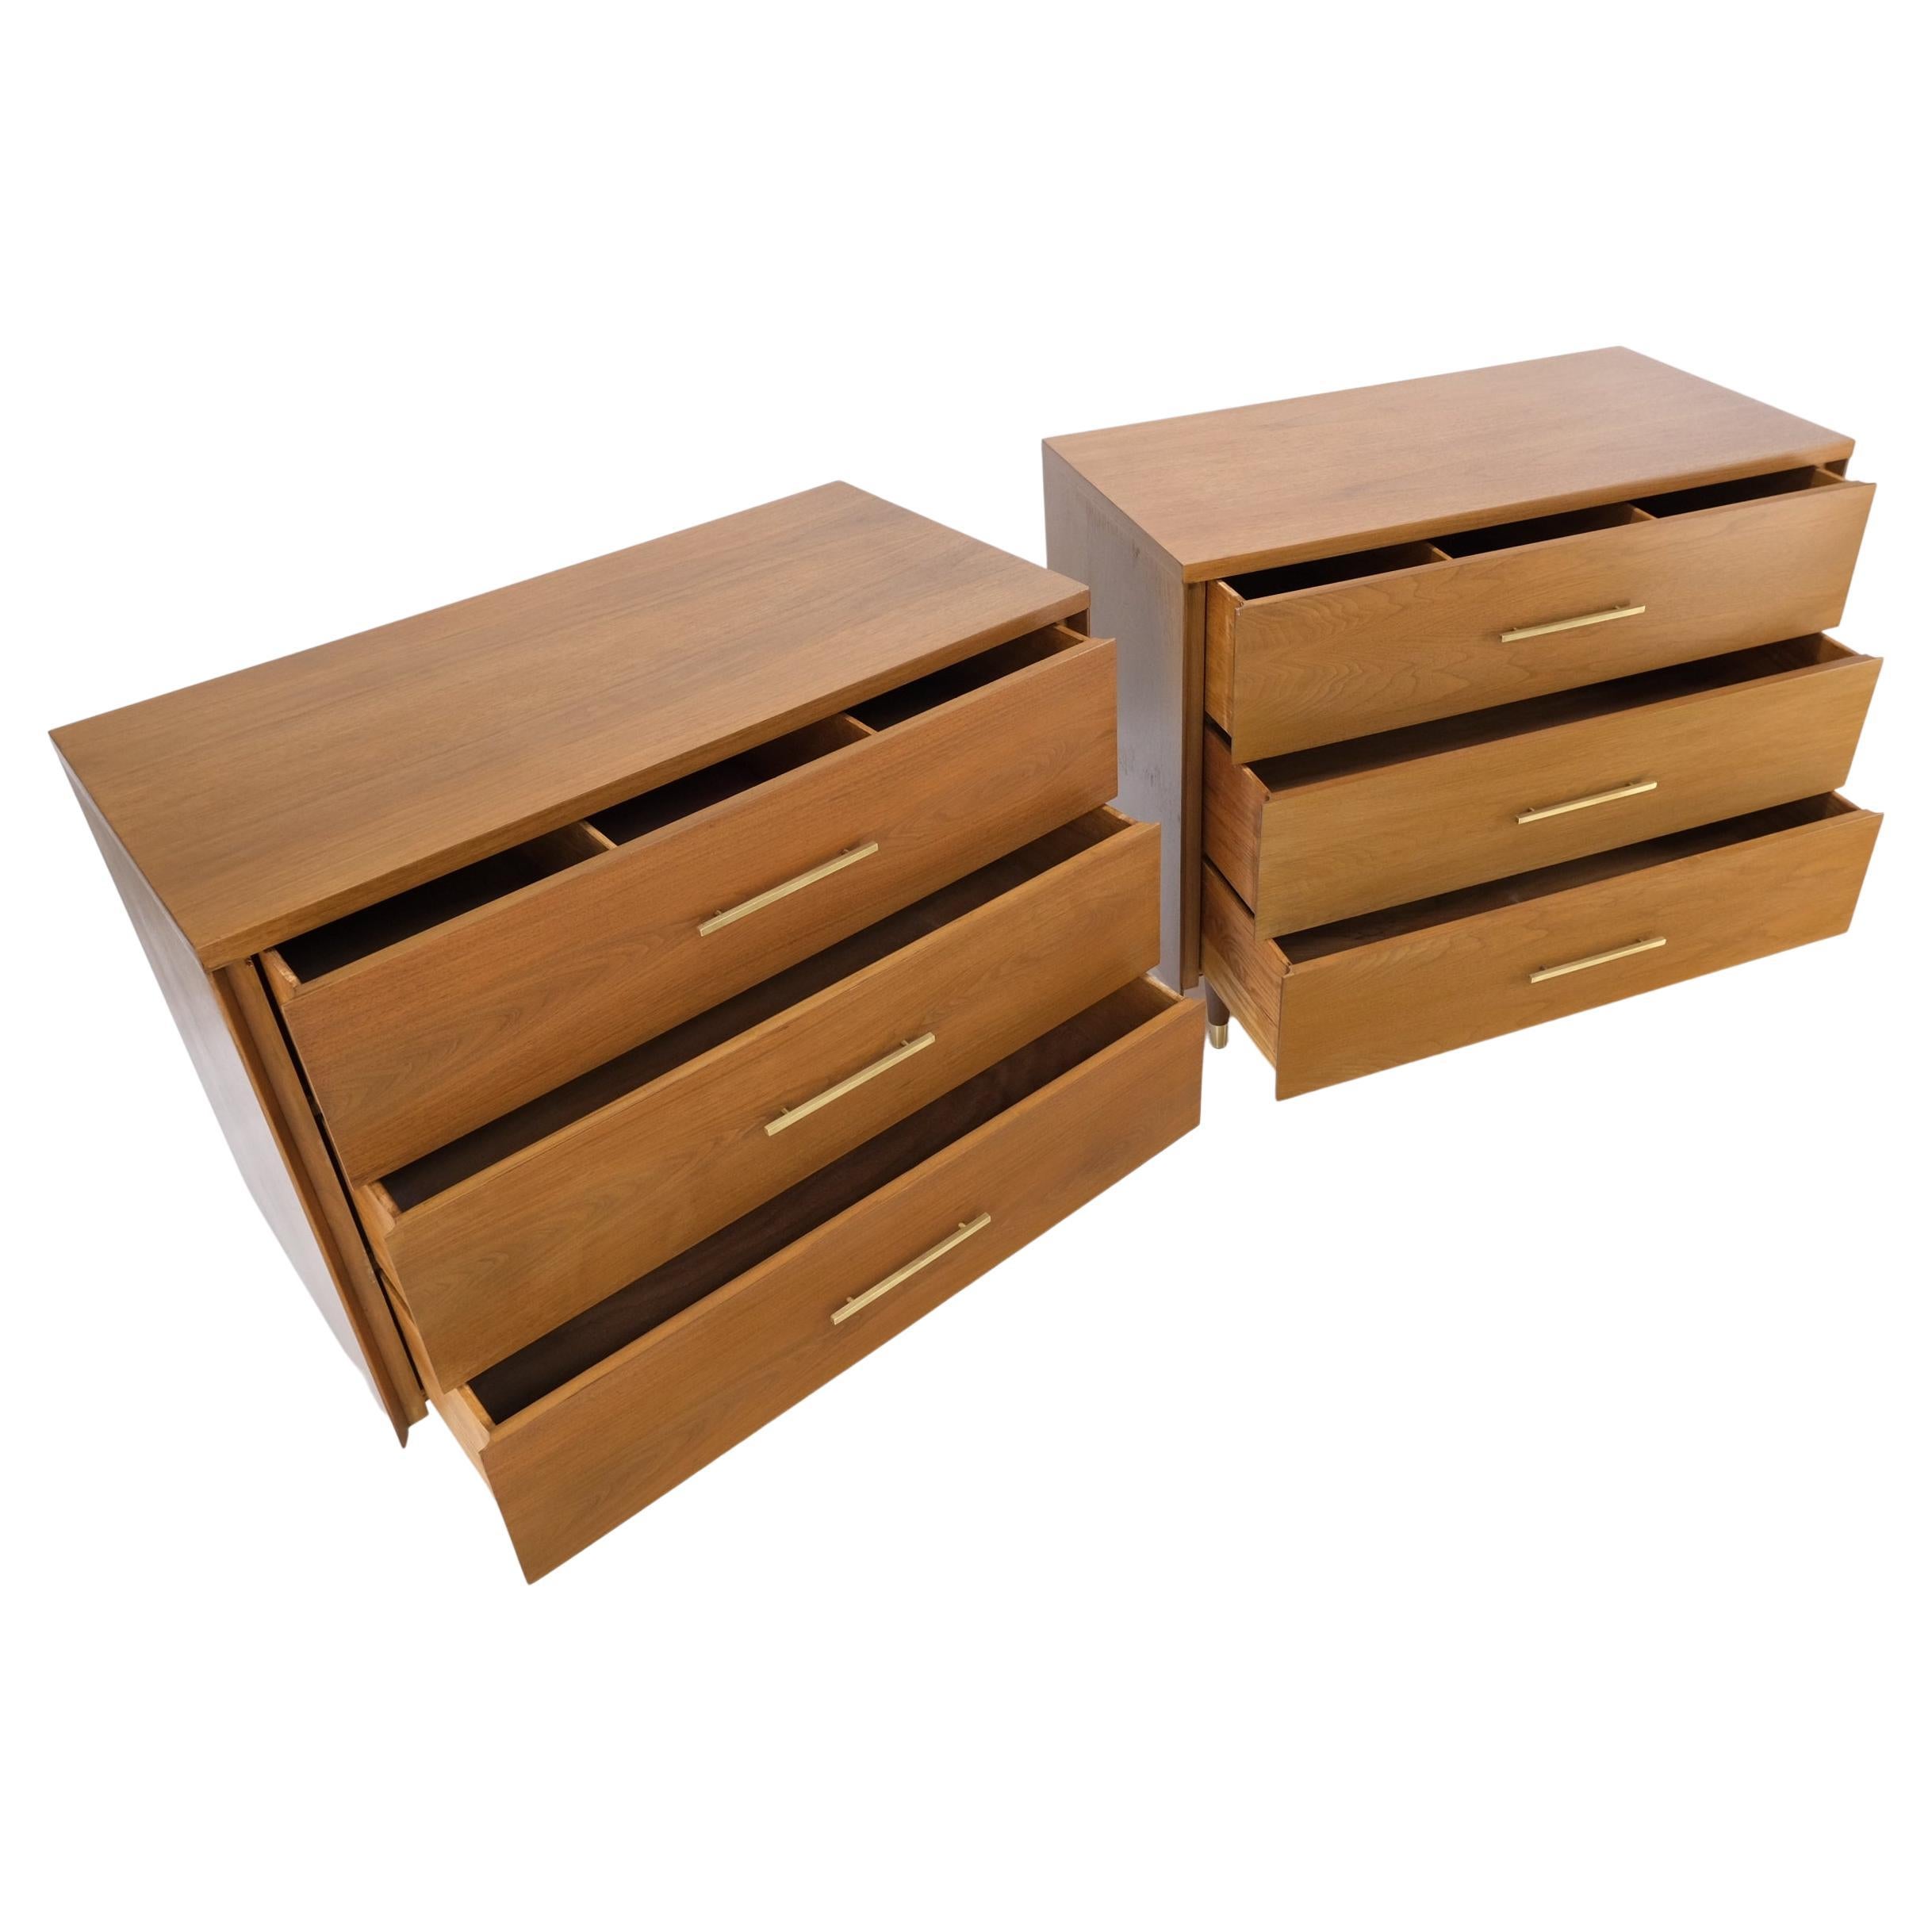 Pair John Stuart refinished 3 drawer bachelor chests dressers w/ long brass pulls.